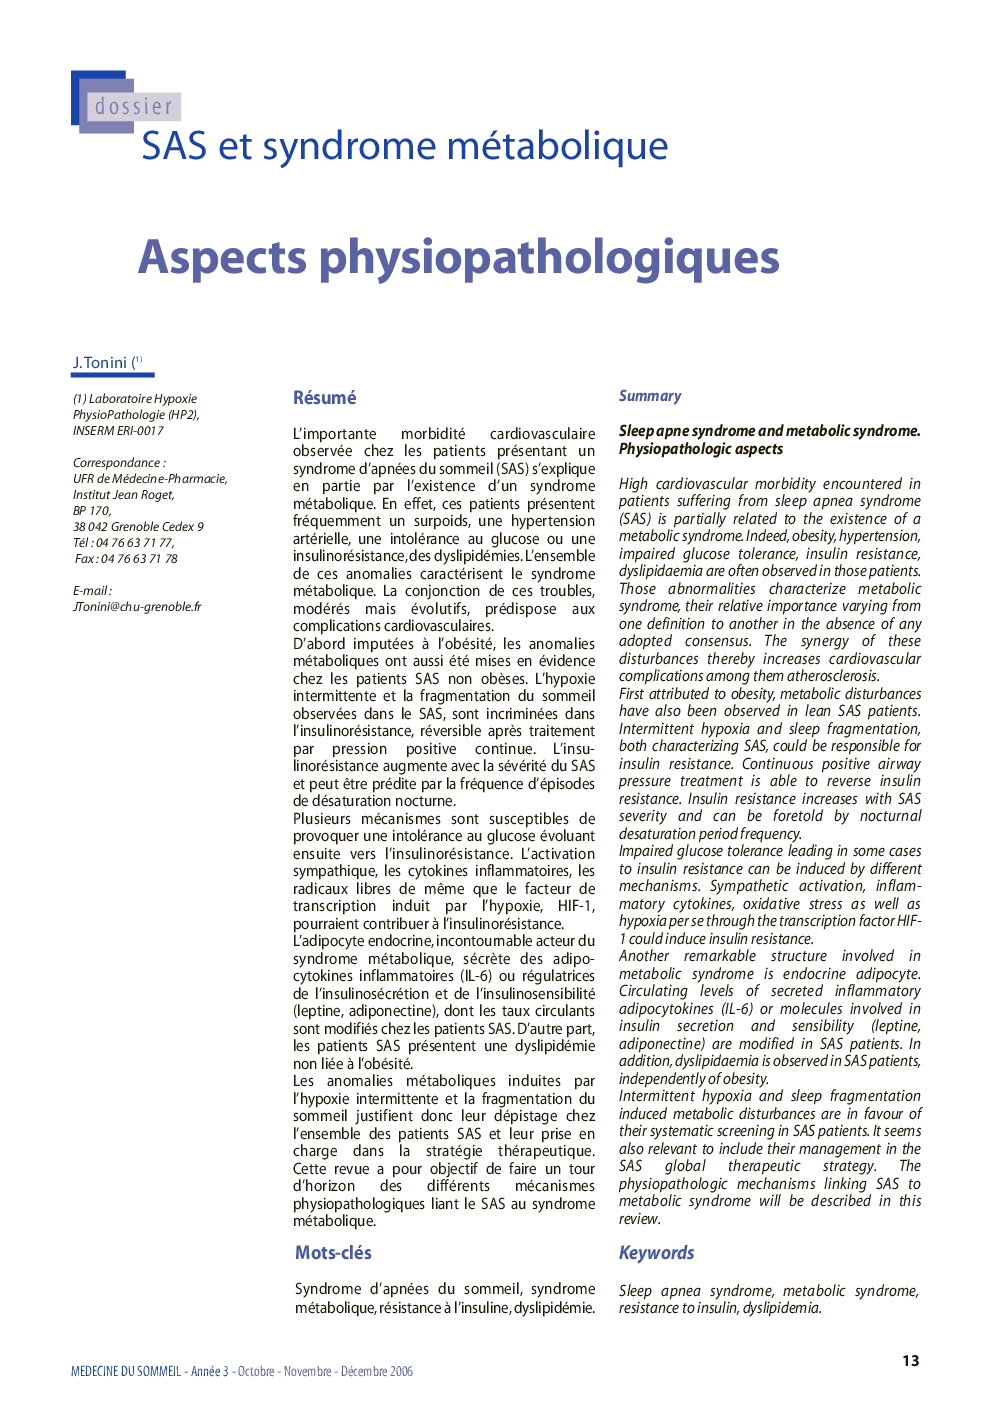 Aspects physiopathologiques